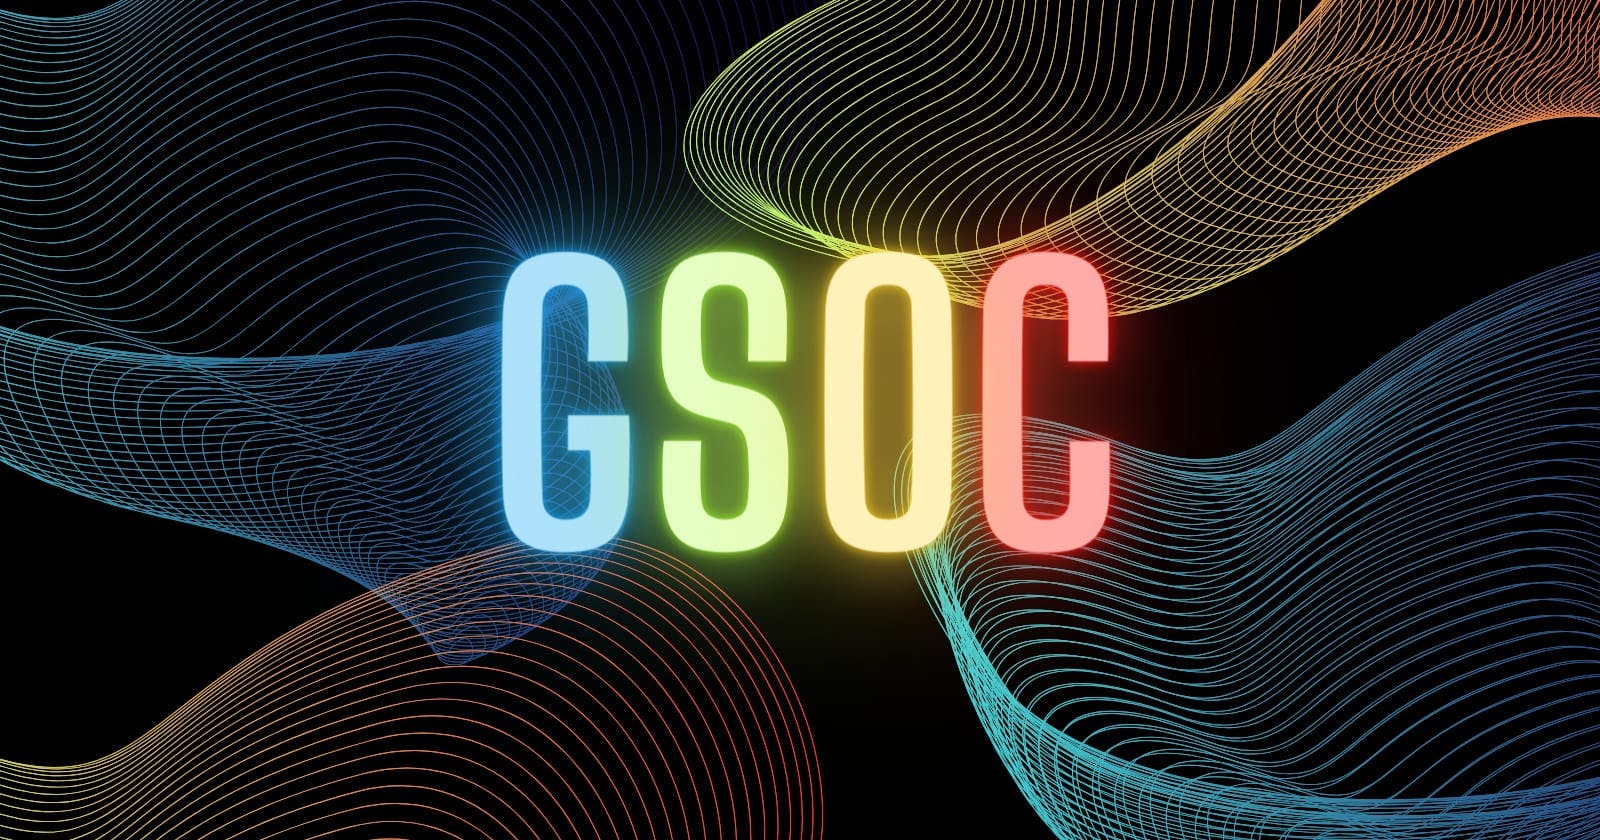 Google Summer of Code (GSoC)